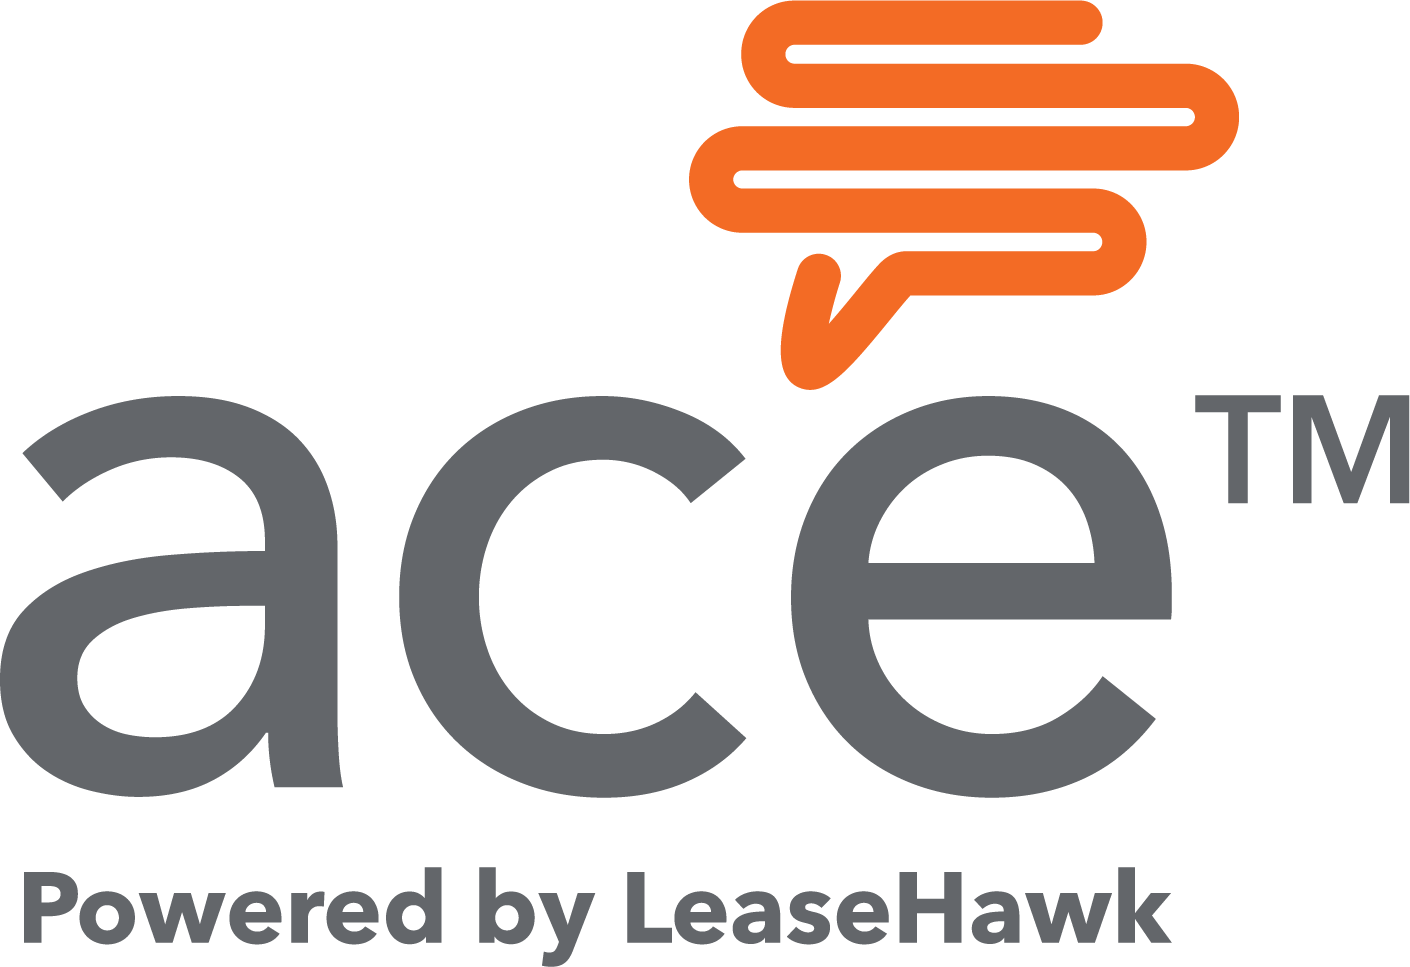 ACE Logo